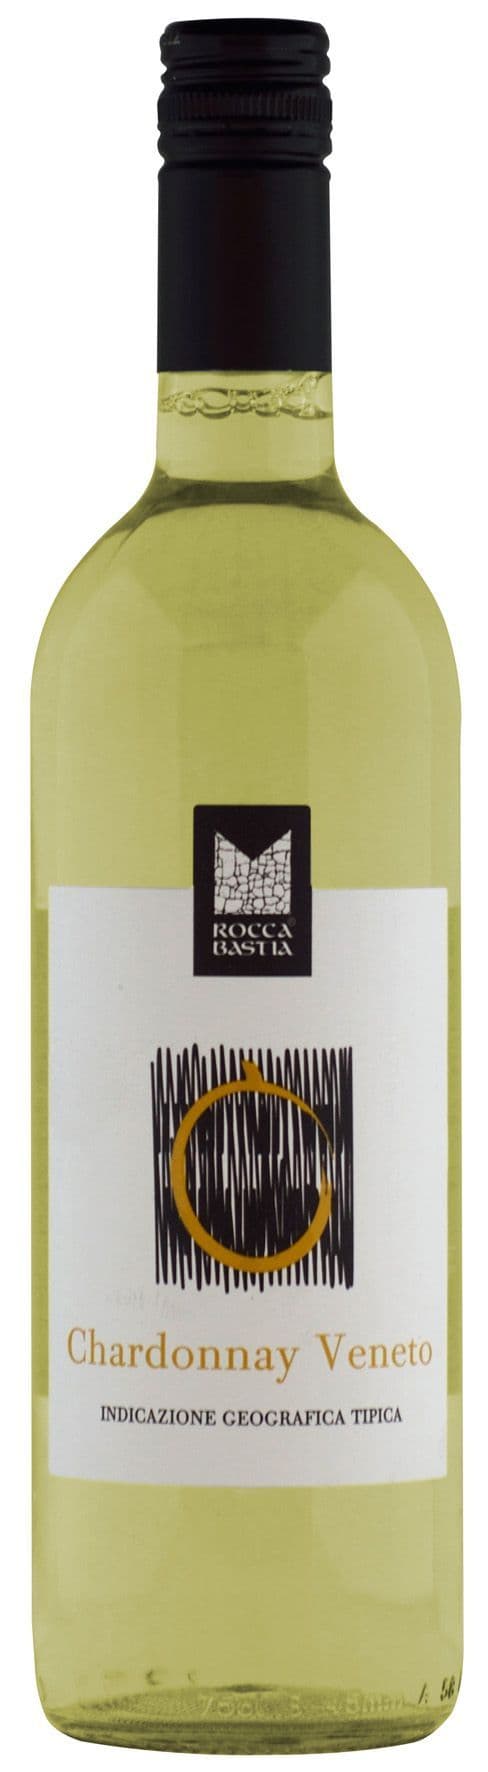 Rocca Bastia Chardonnay